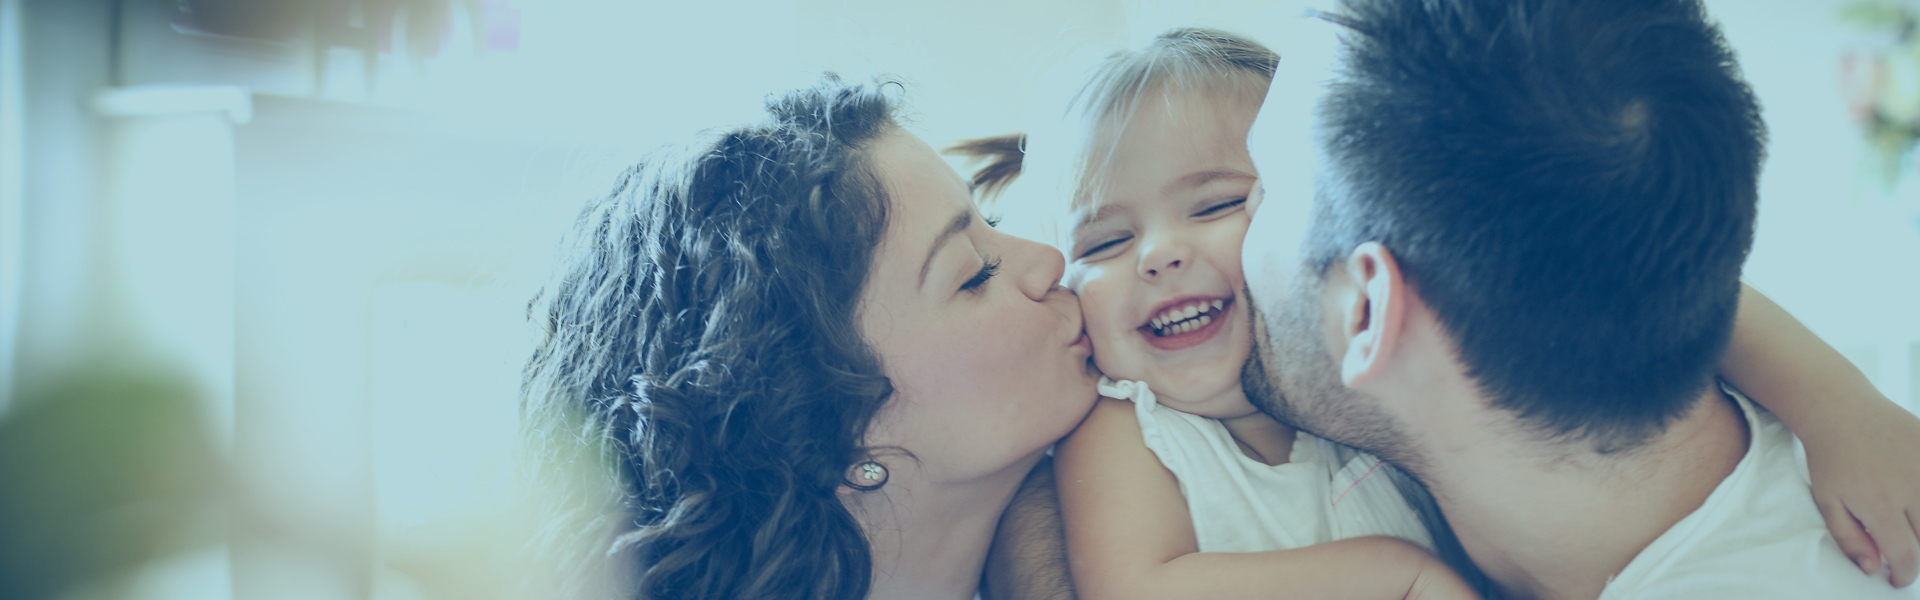 Share Savings Hero | Family kissing small child